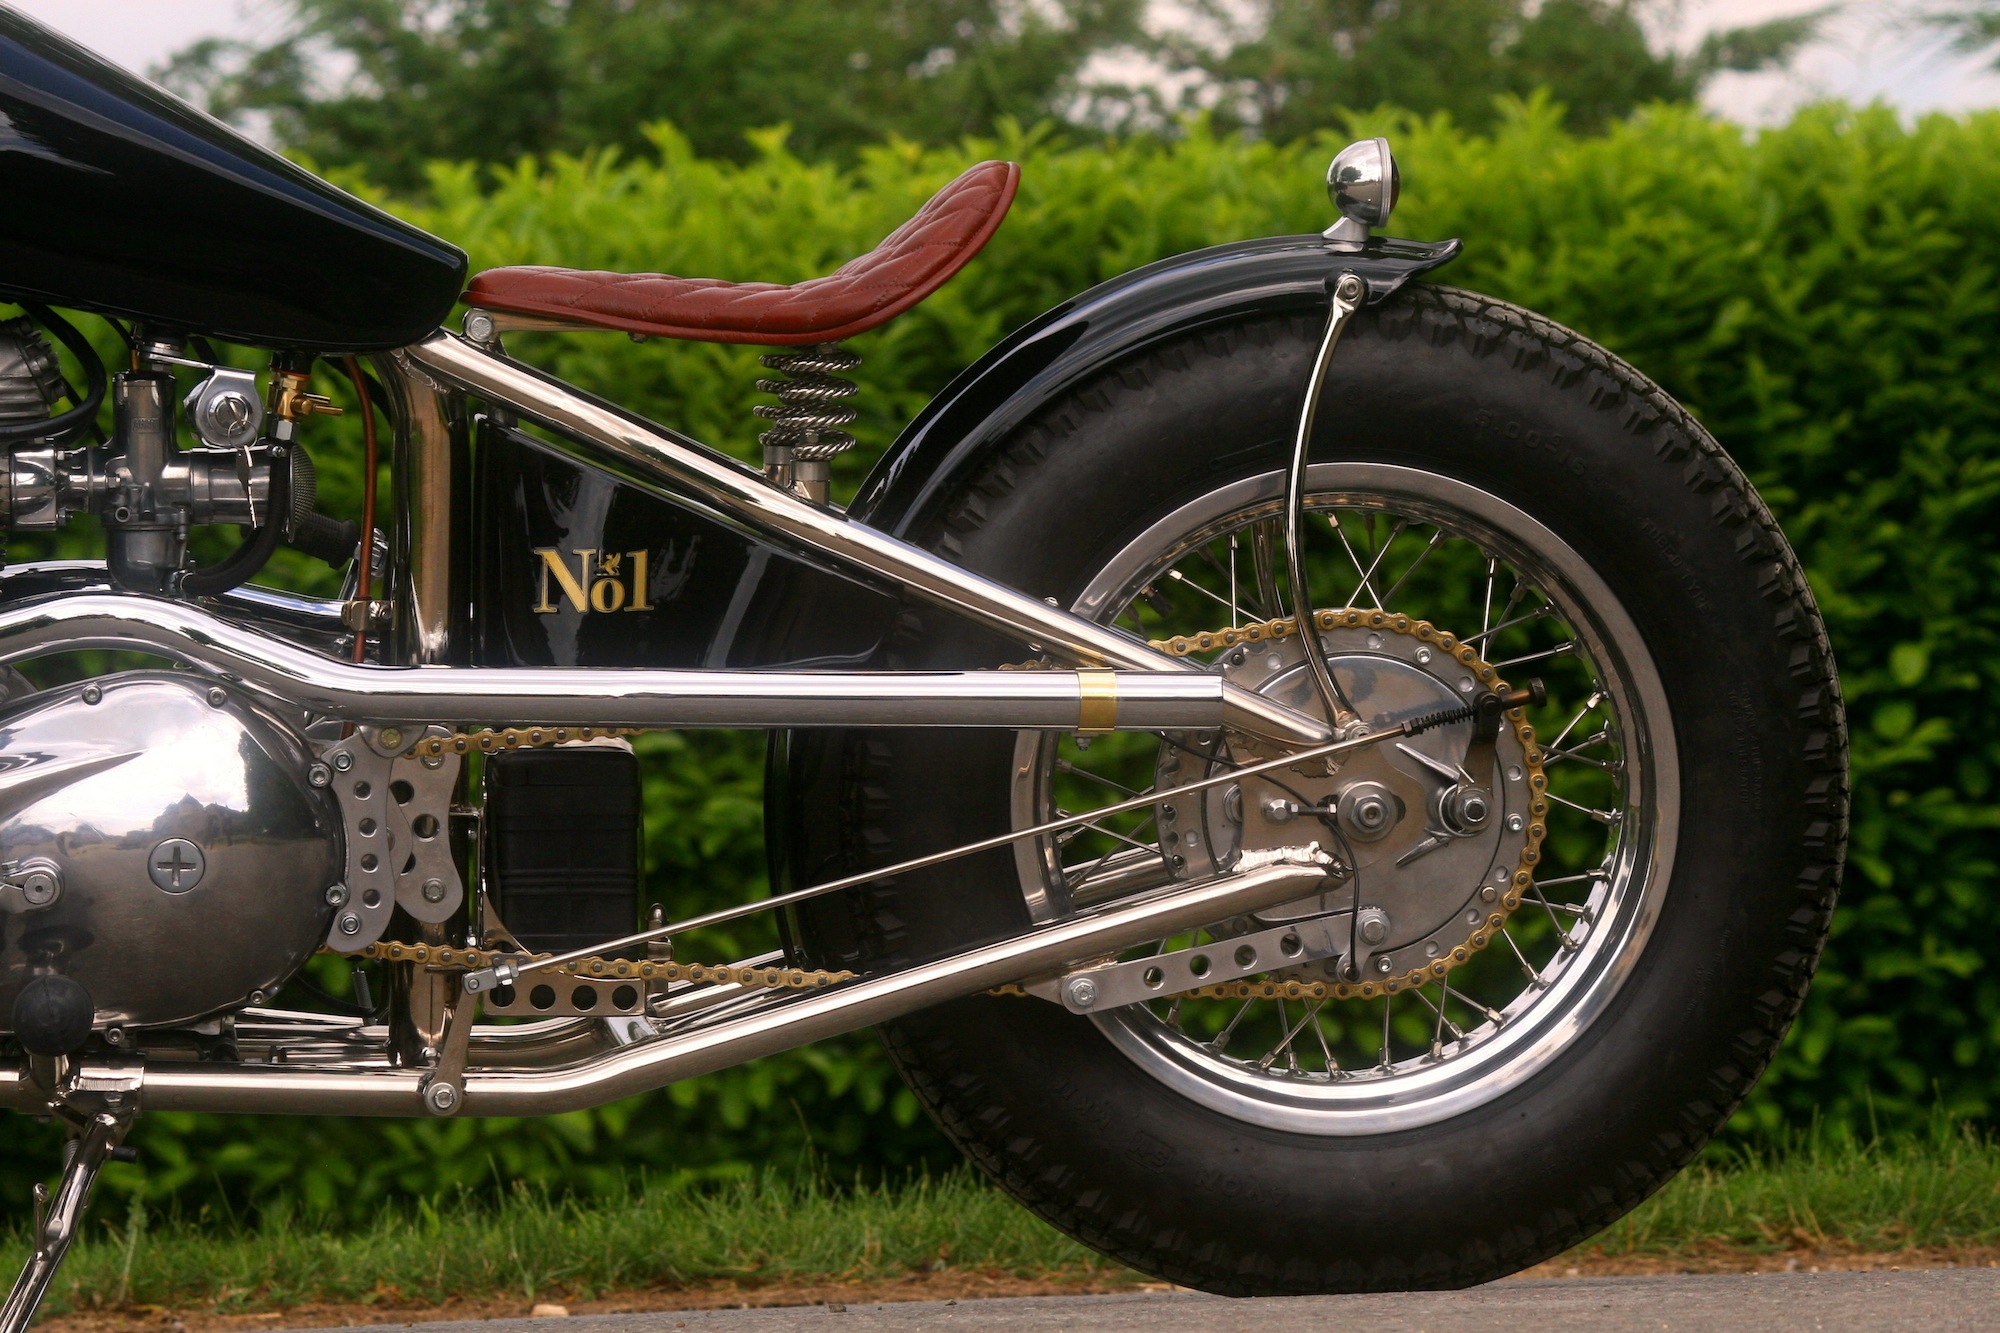 The Gladstone No. 1 British motorcycle